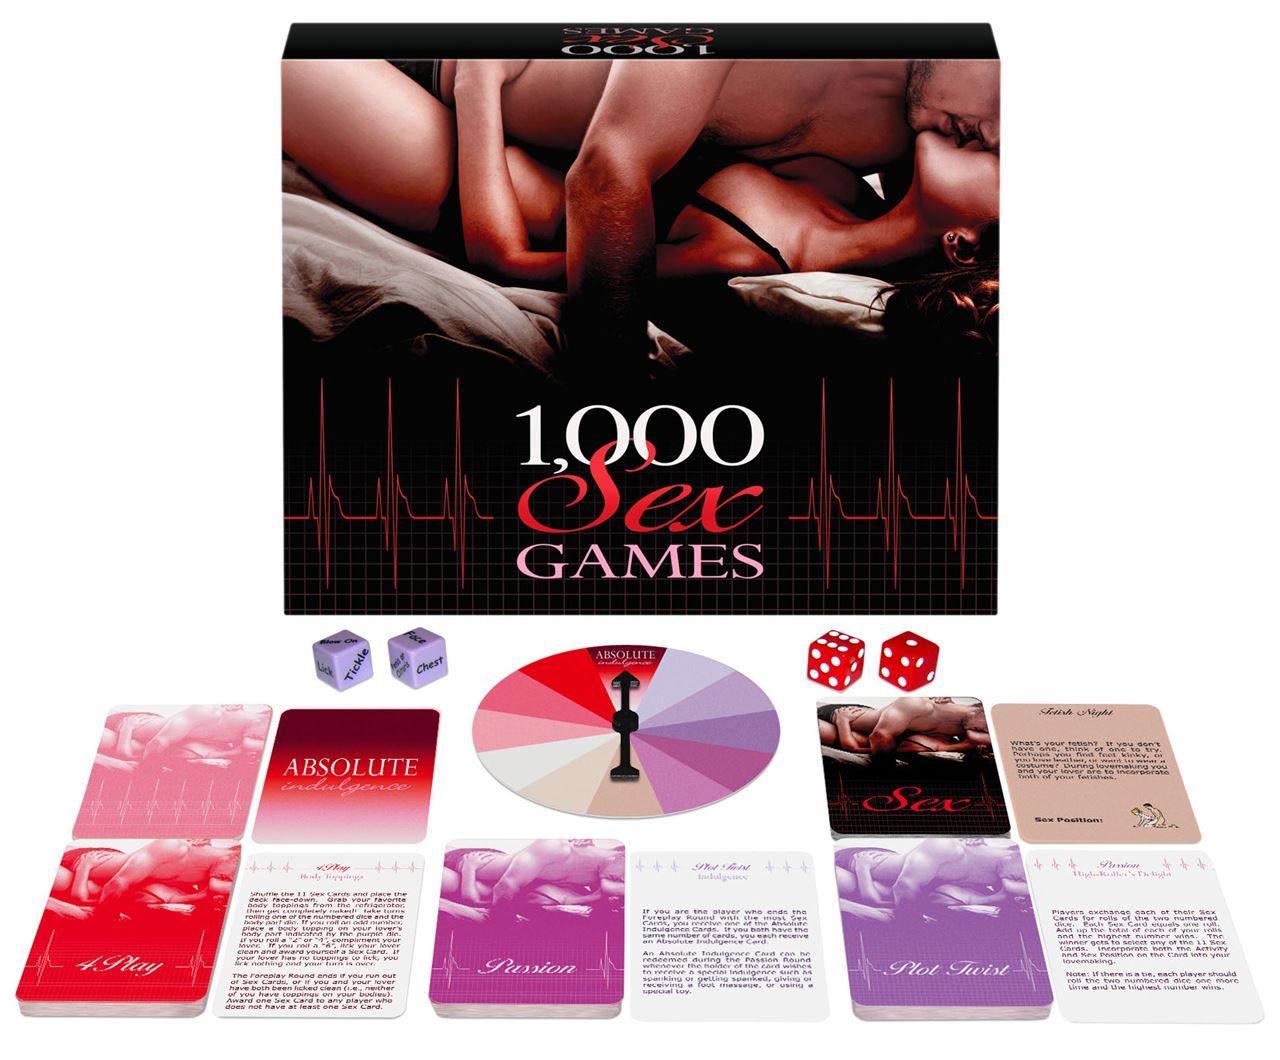 Joc de cupluri, 1000 sex games, provocari erotice in limba engleza